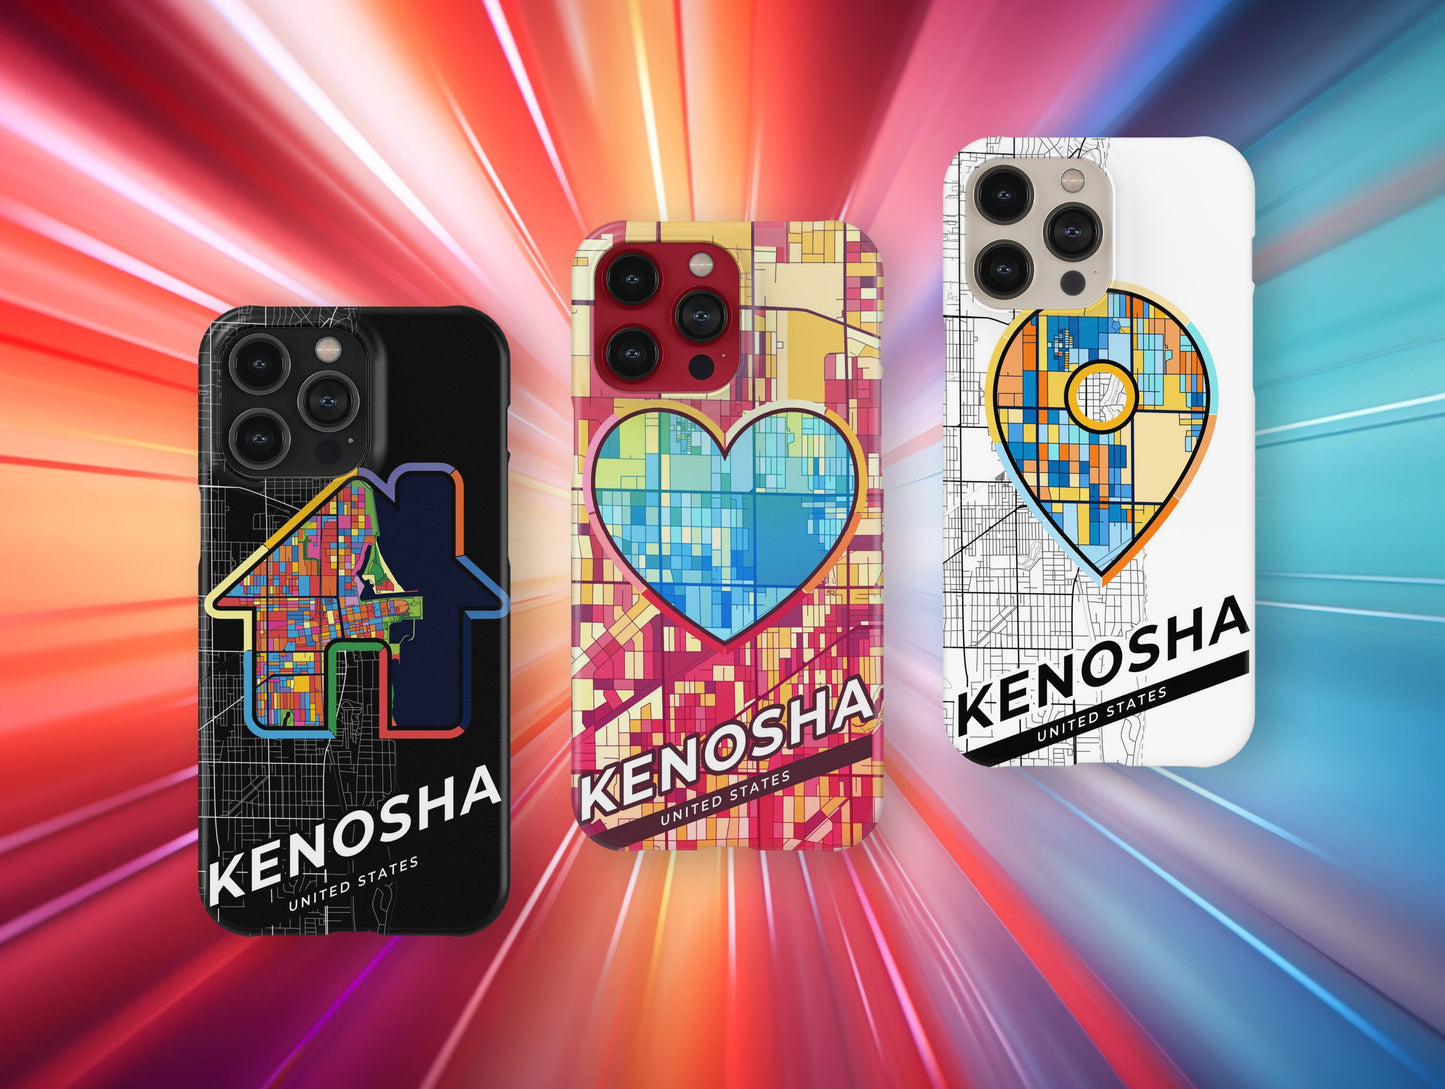 Kenosha Wisconsin slim phone case with colorful icon. Birthday, wedding or housewarming gift. Couple match cases.